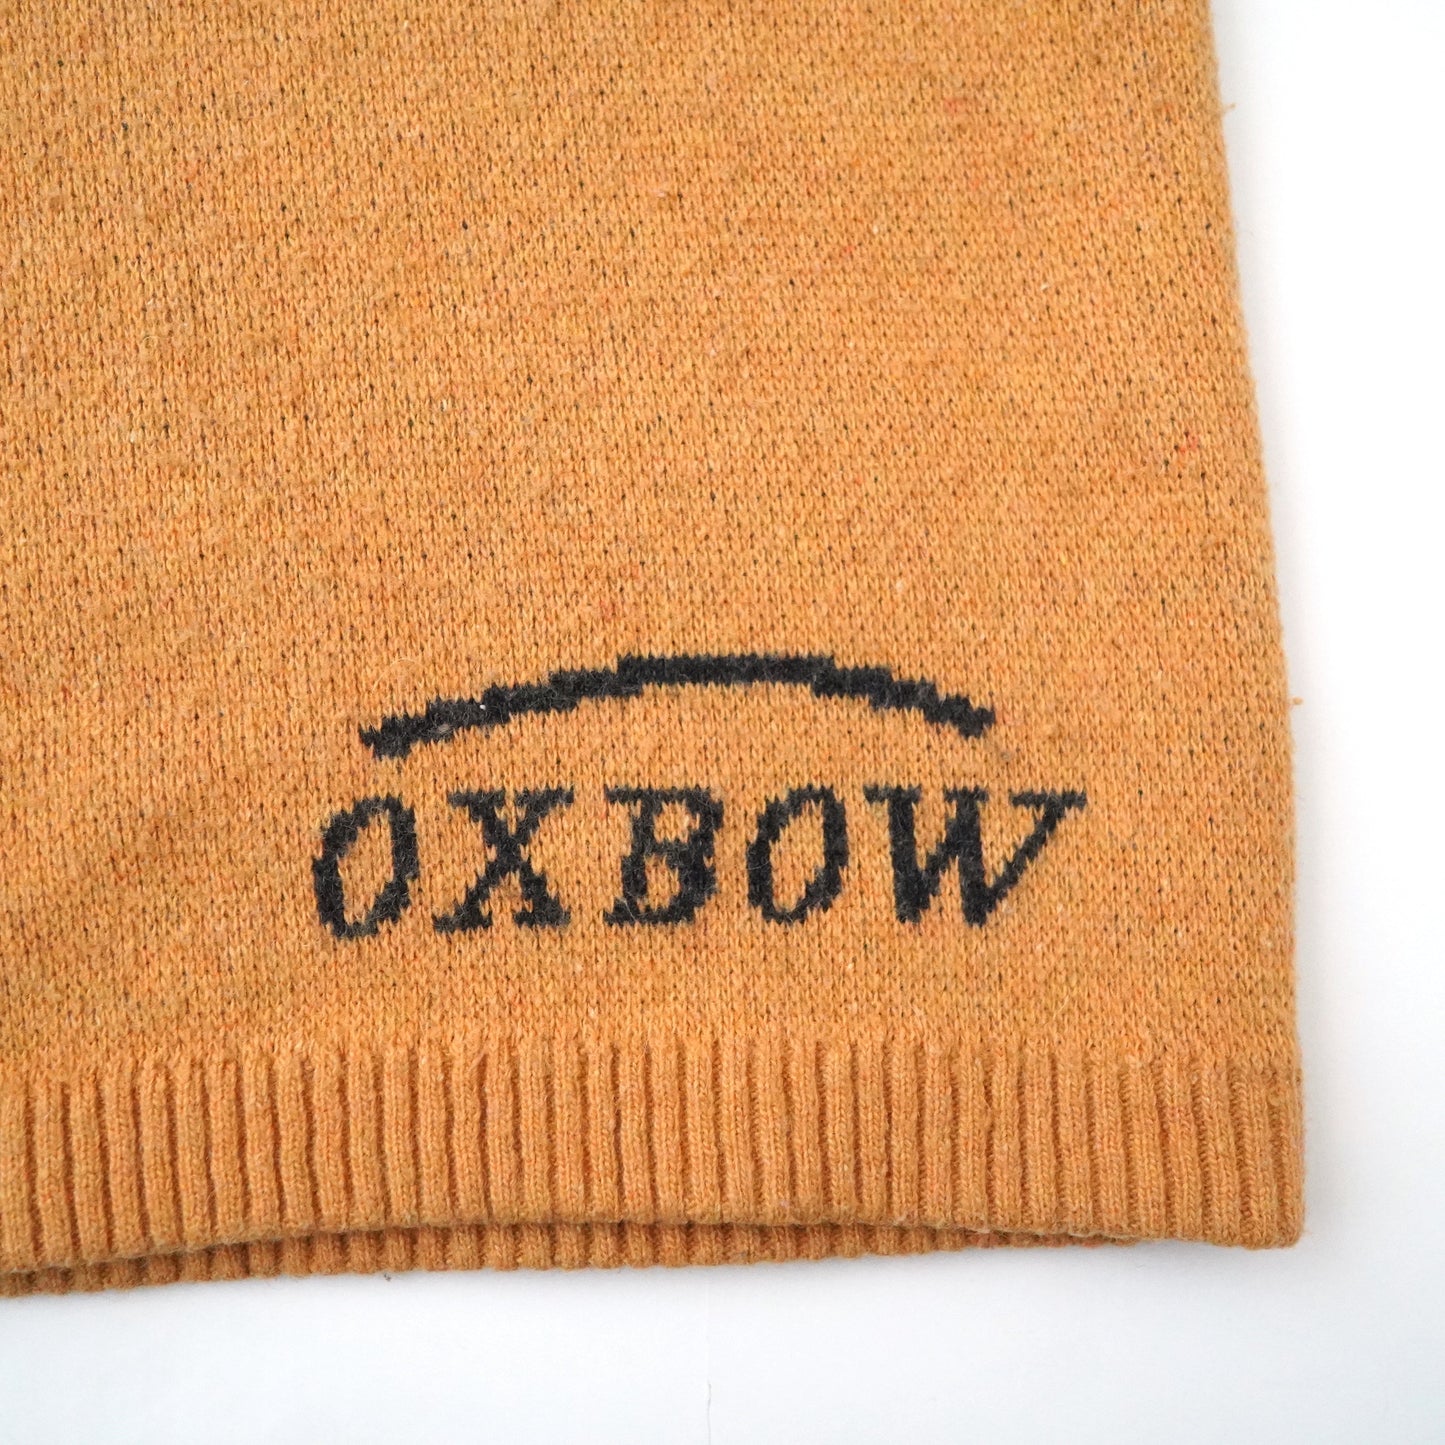 90s OXBOW sweater